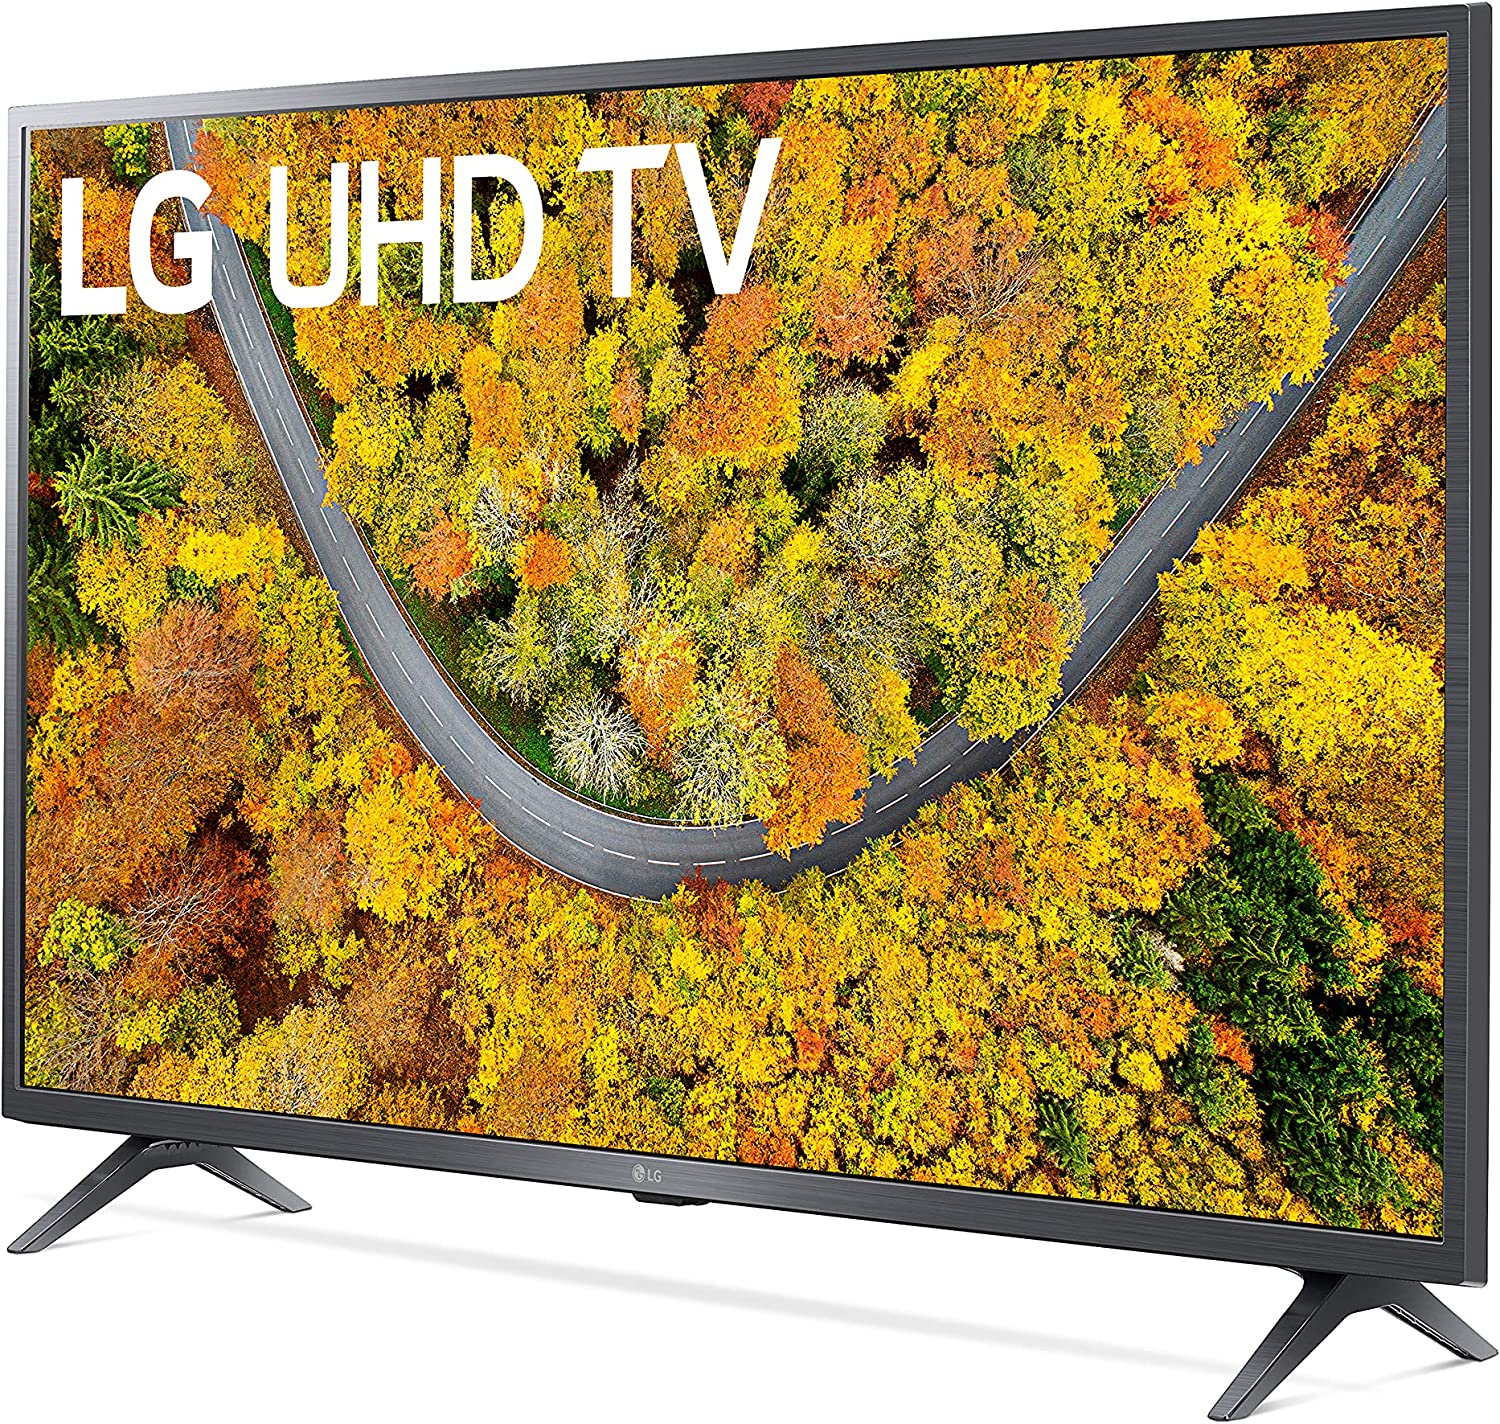 TV - LG 50" 50UP7700 WebOs SMART 4K UHD LED TV With Magic Remote, (Certified Refurbished - 90 Days Warranty)